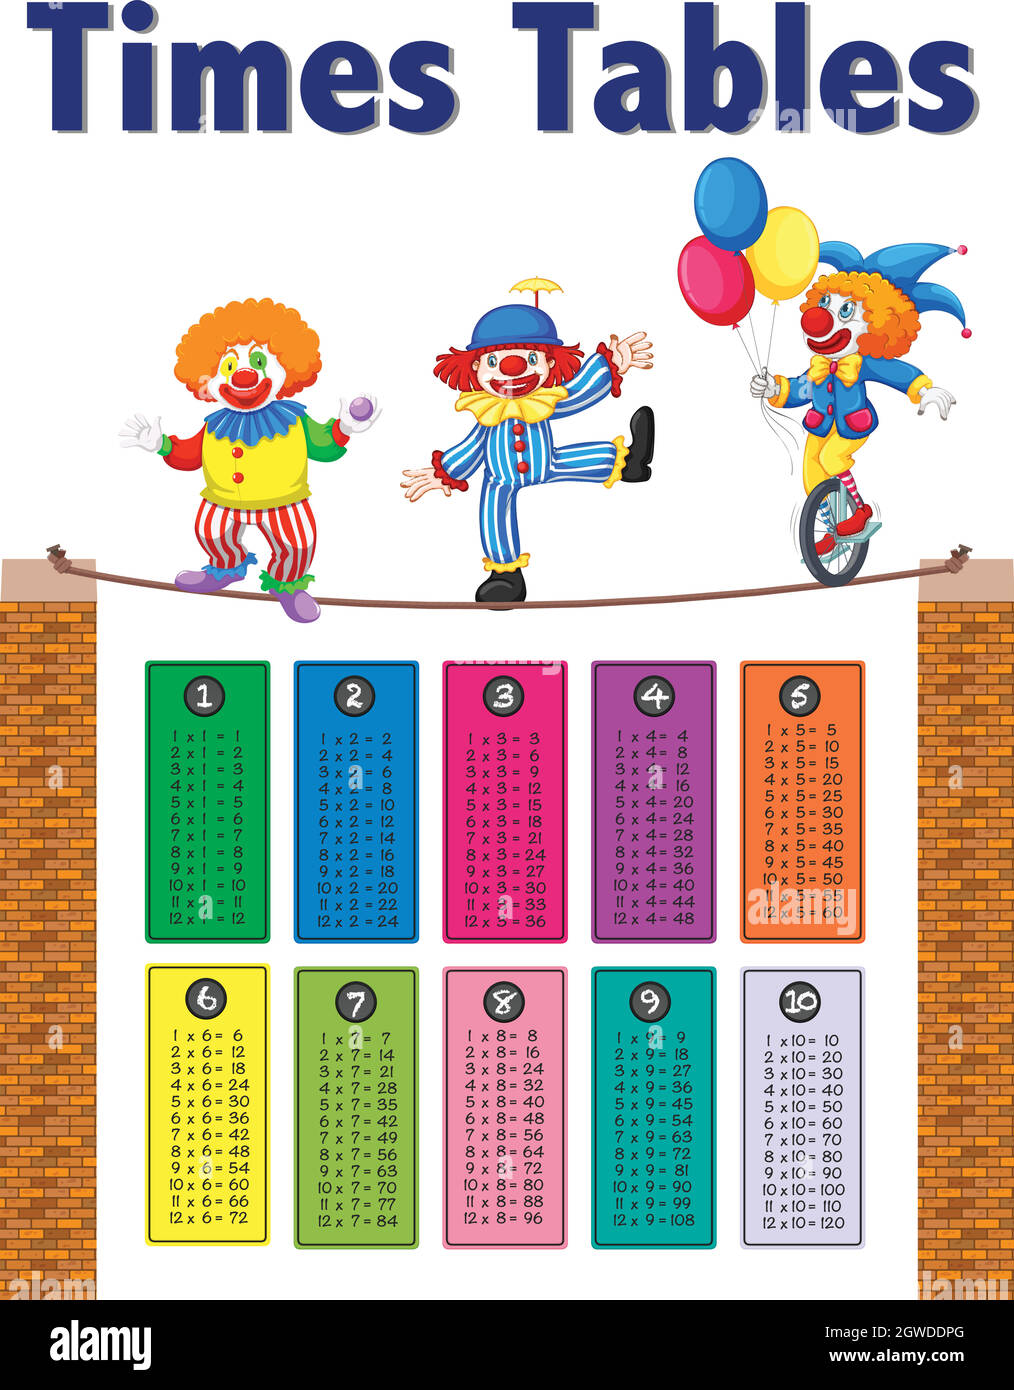 Math Times Tables Clown Theme Stock Vector